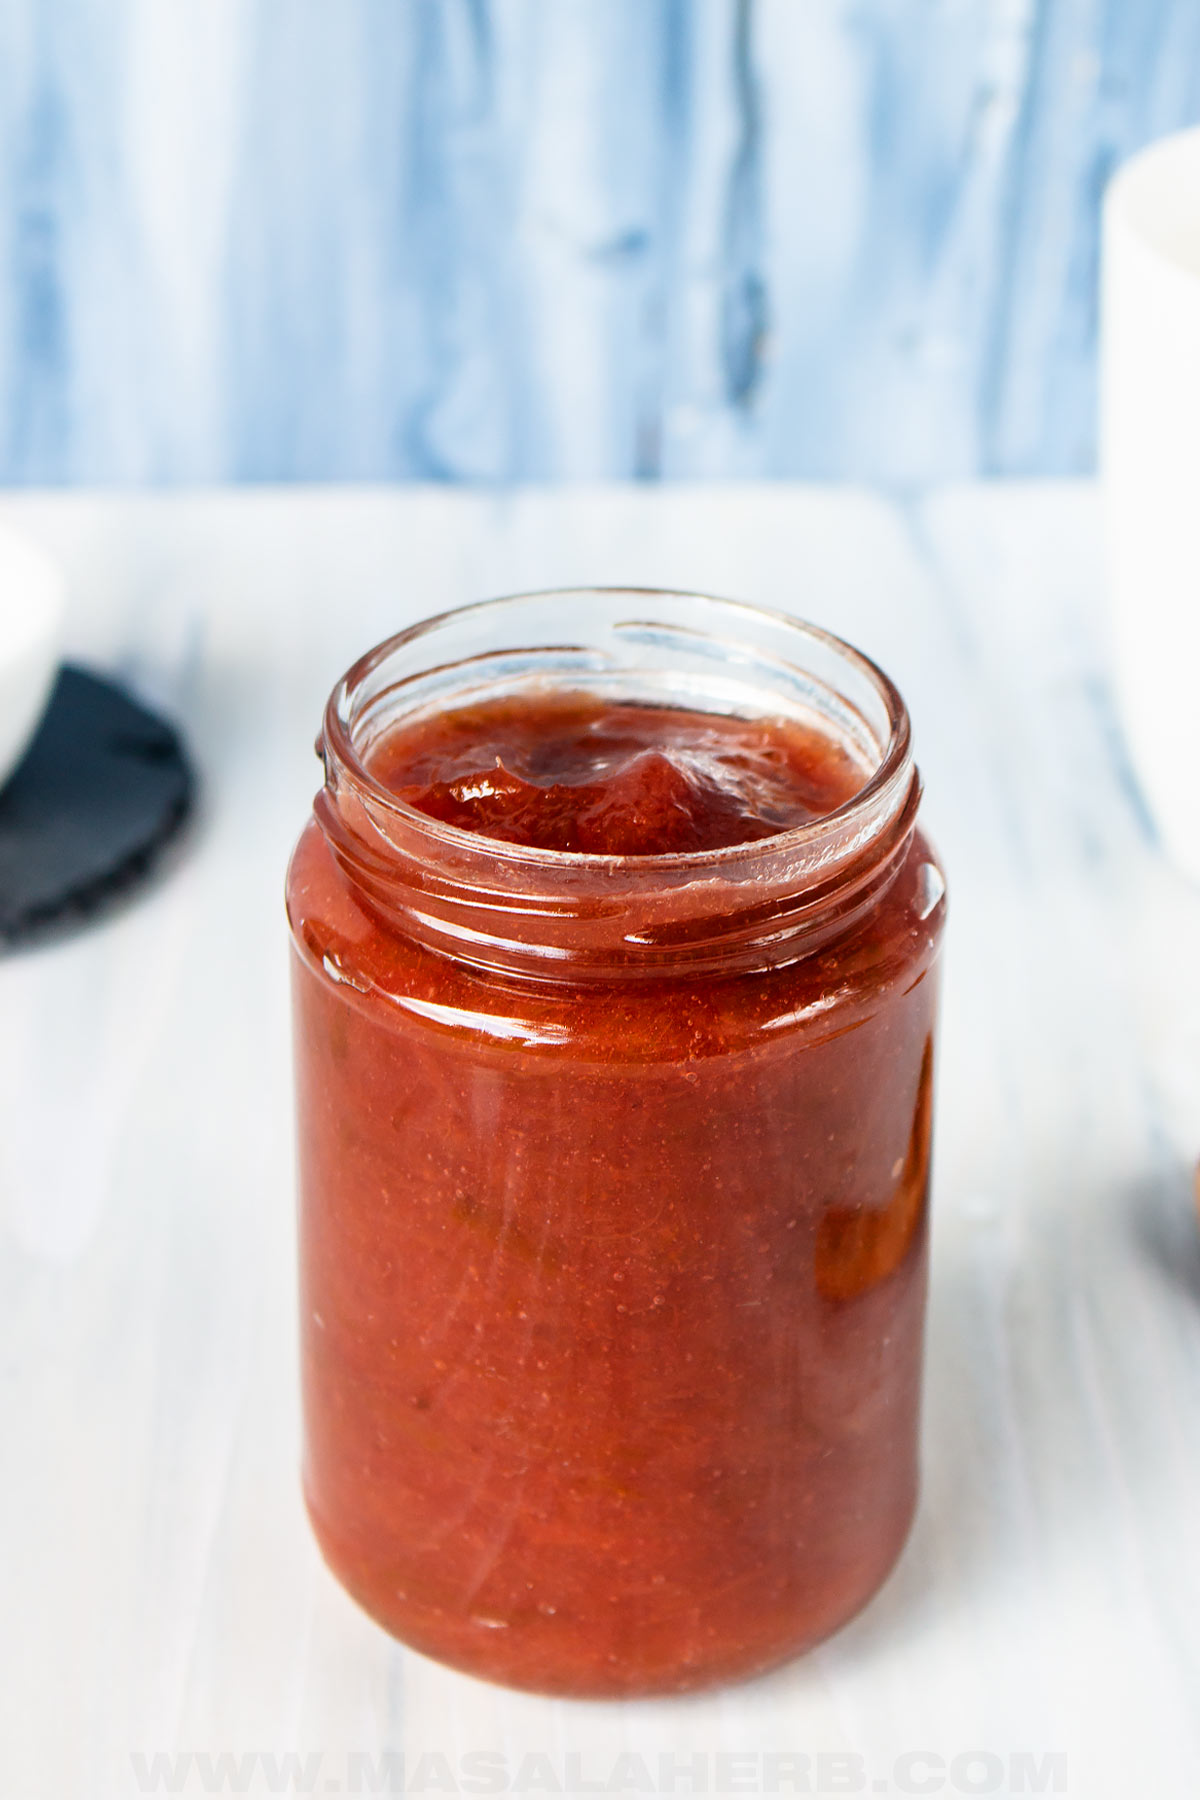 jar of homemade rhubarb jam